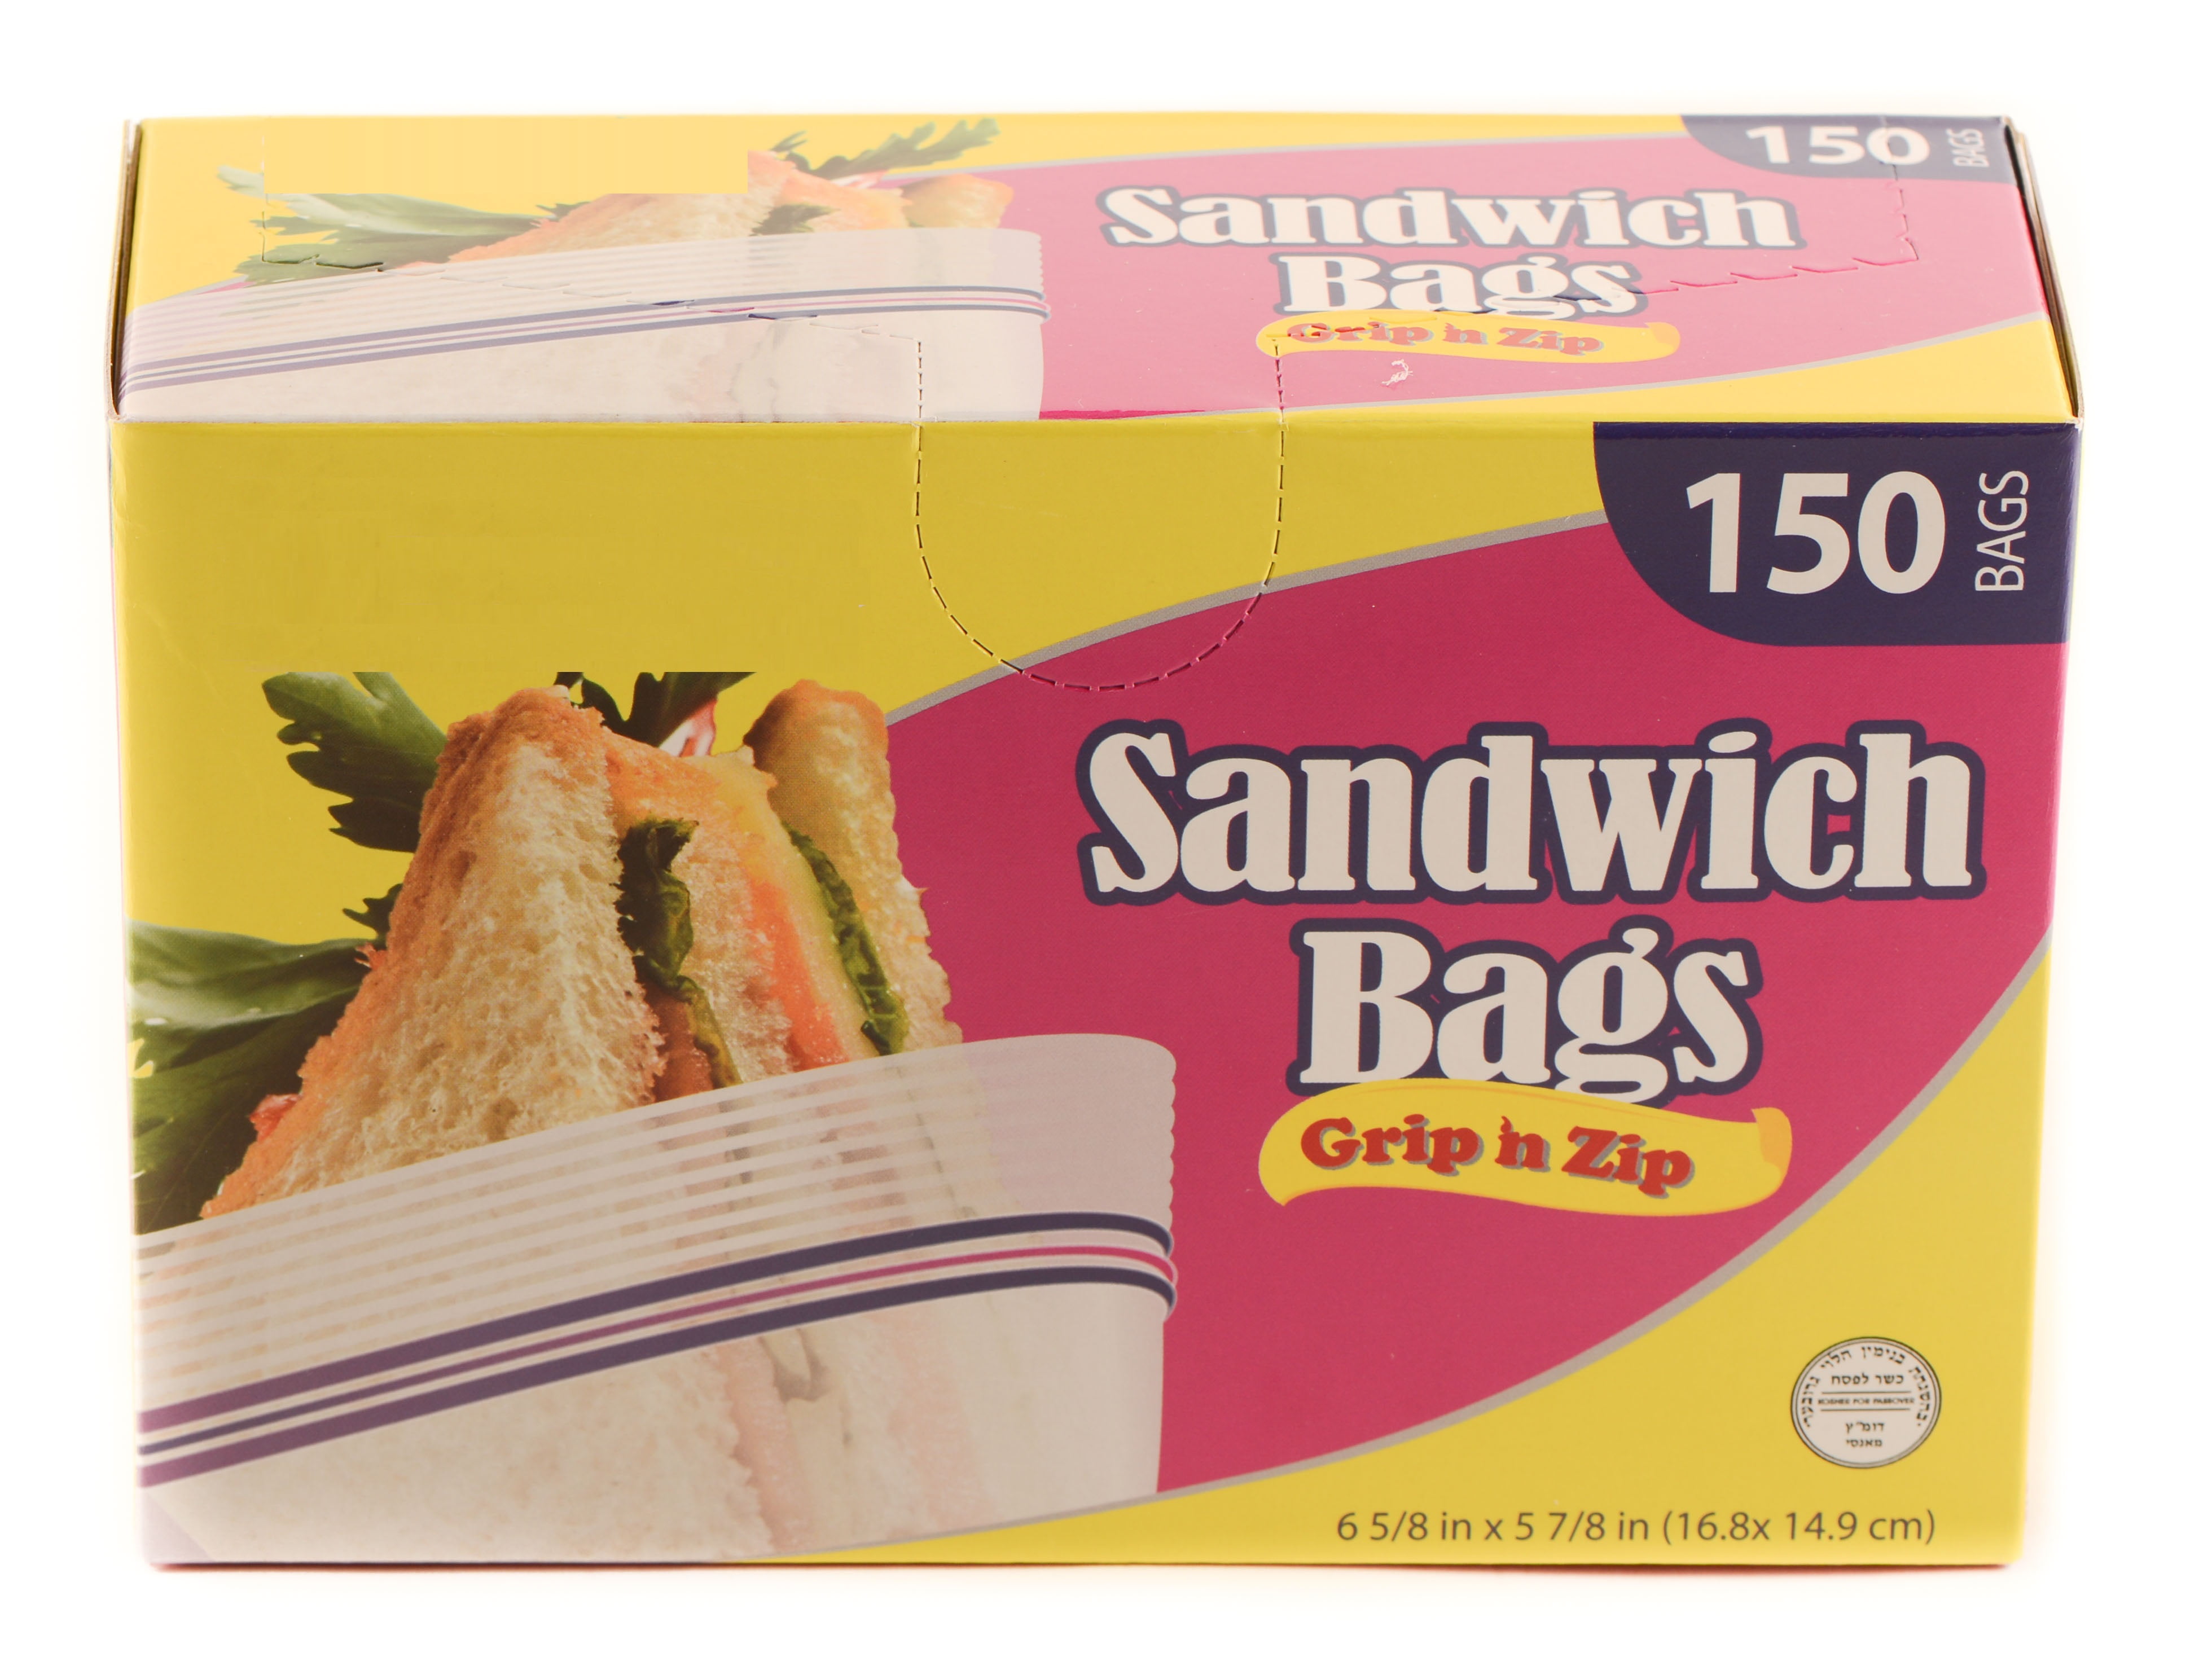 3 Rolls Plastic Bags Disposable Food Storage - 3 Size - 240pcs Bags